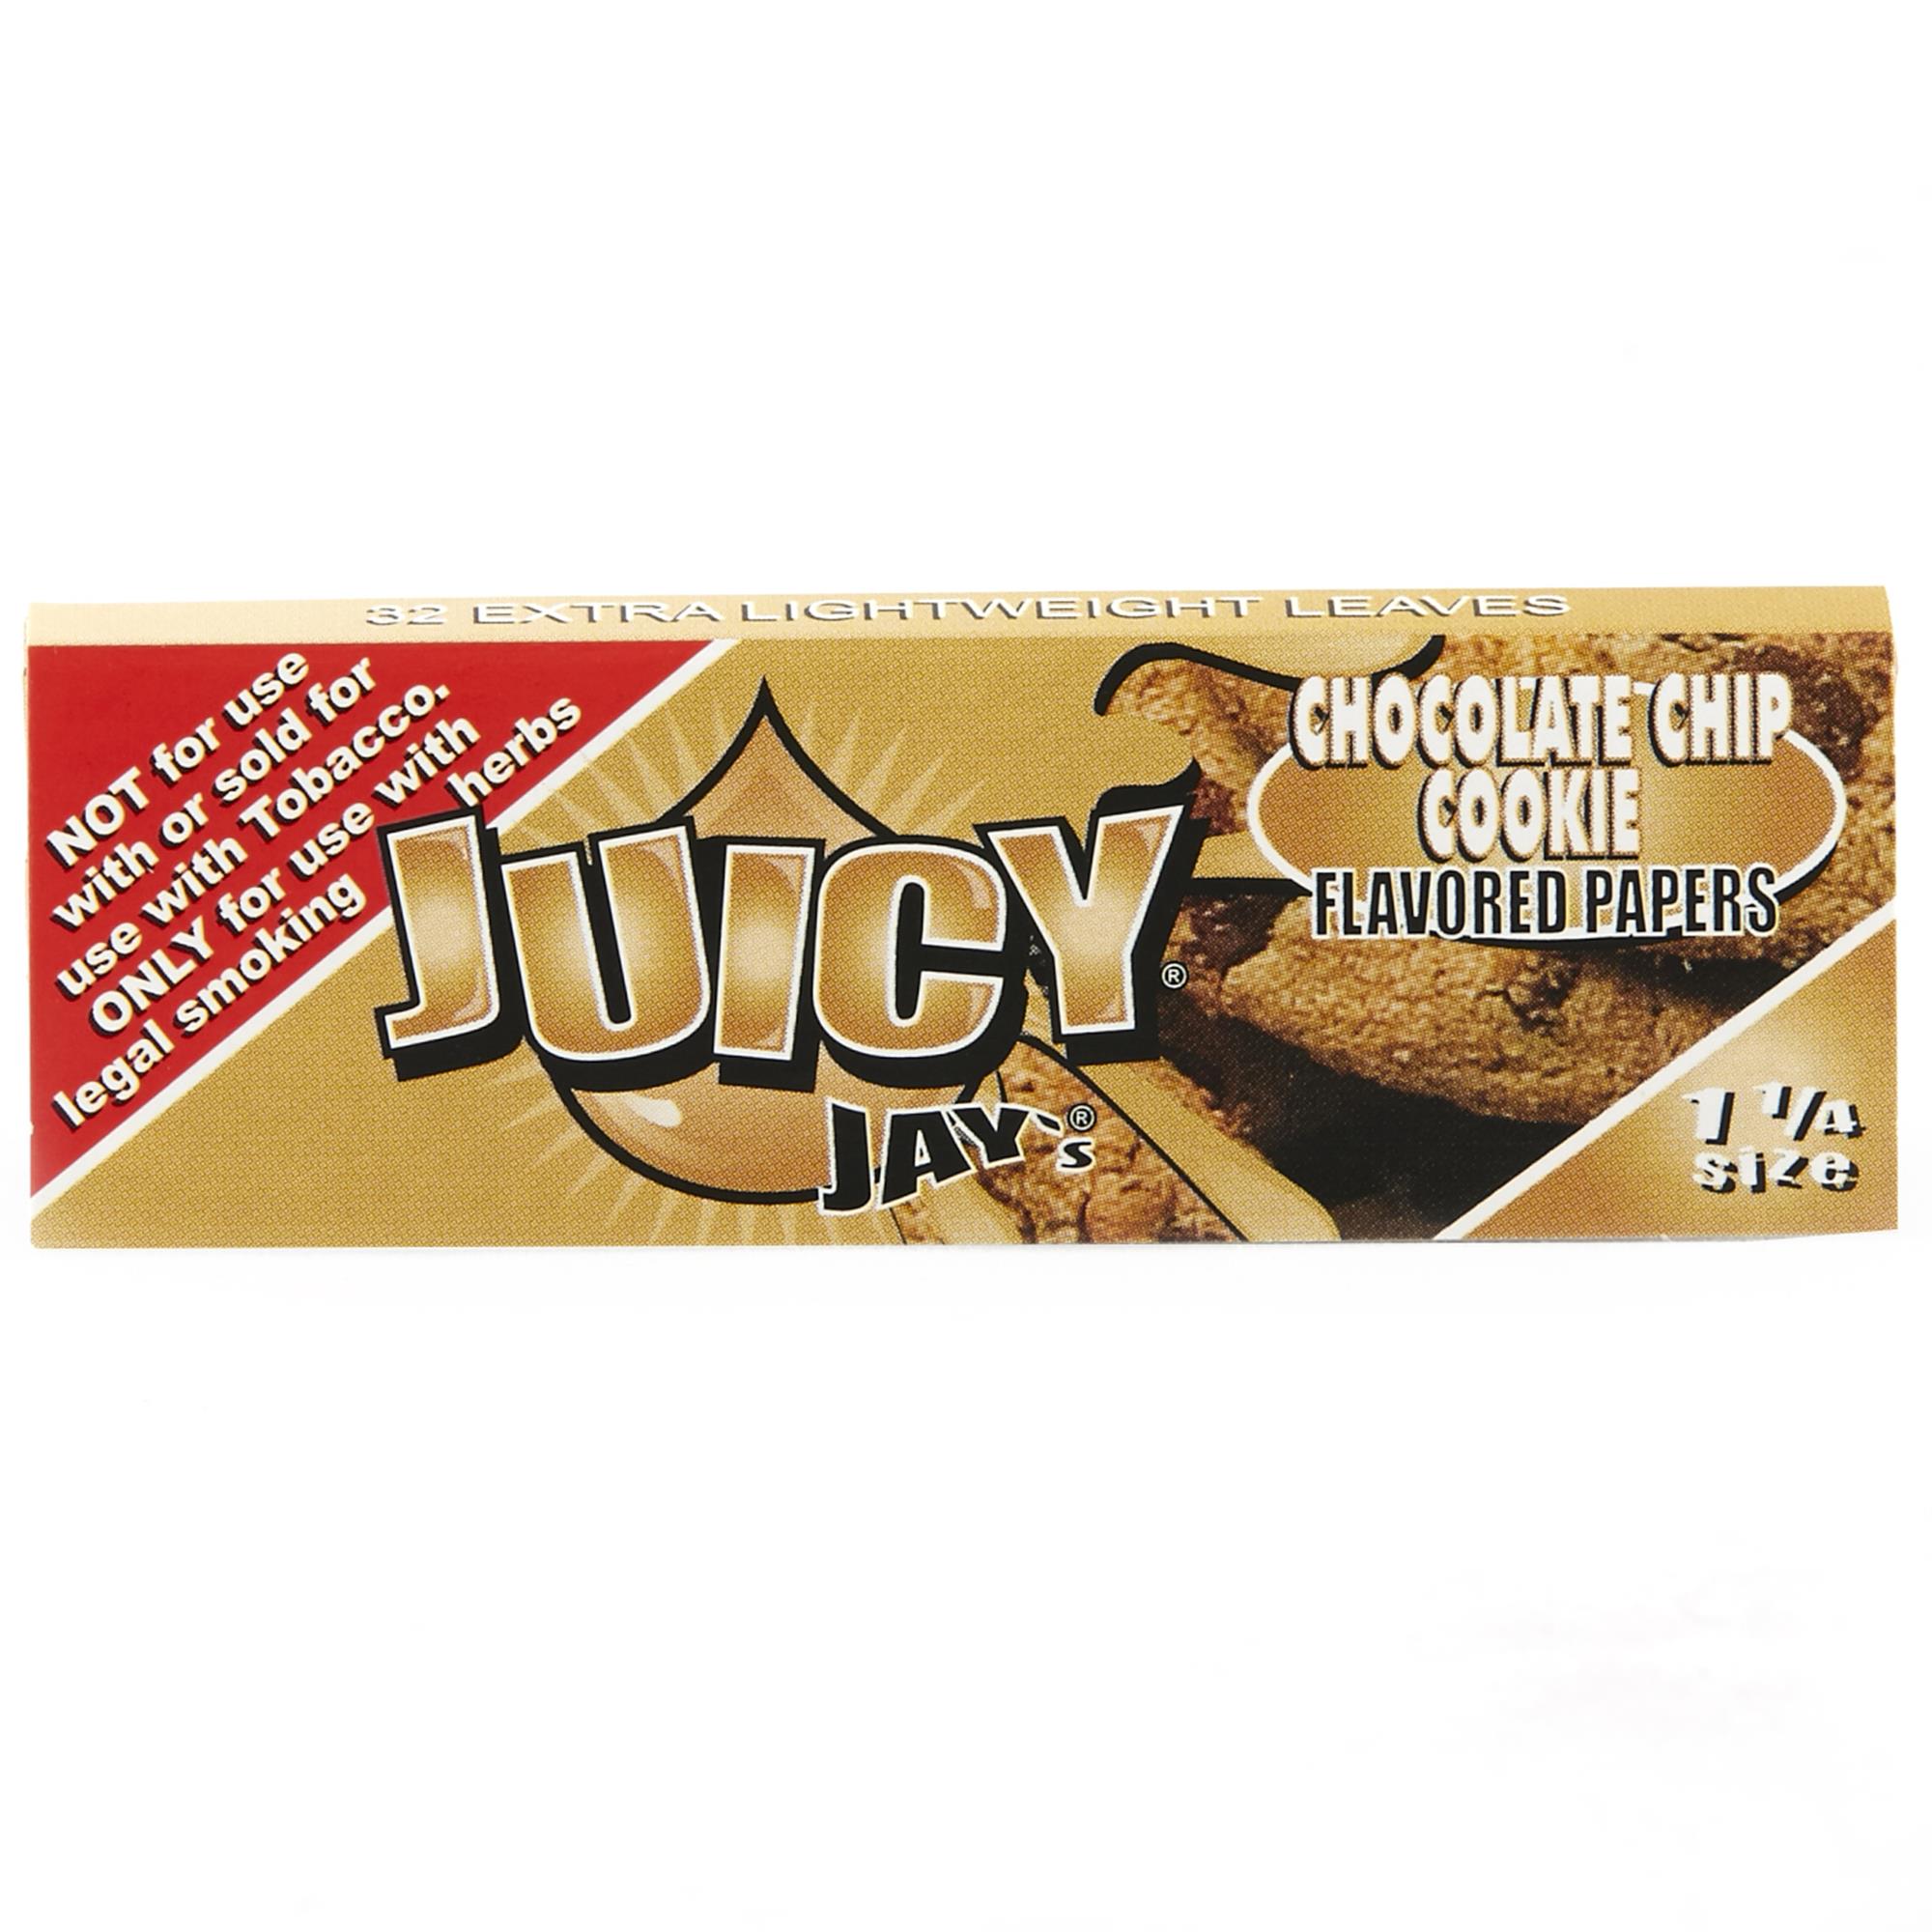 JUICY JAYS CHOCOLATE CHIP COOKIE